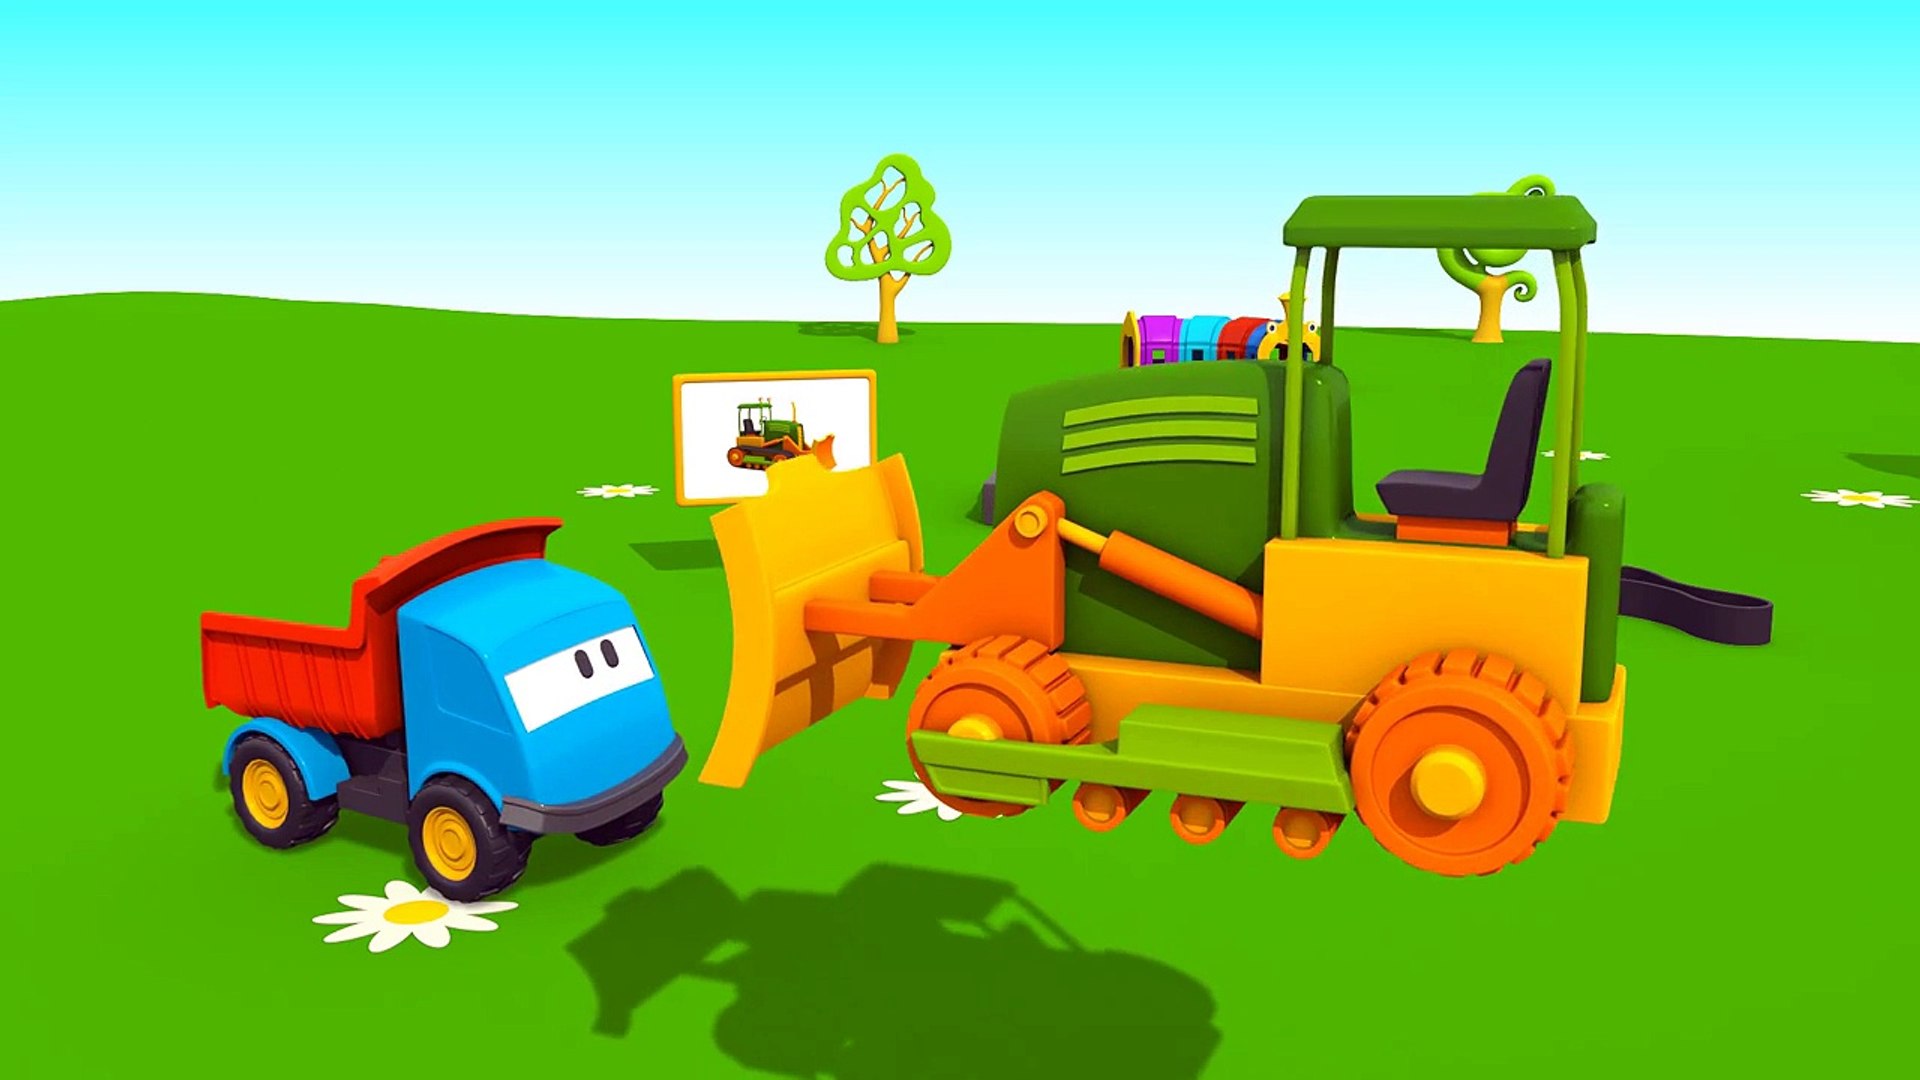 TuTiTu cartoon style - Kids 3D Construction Cartoons for Children 20 - Leos  BULLDOZER - video Dailymotion